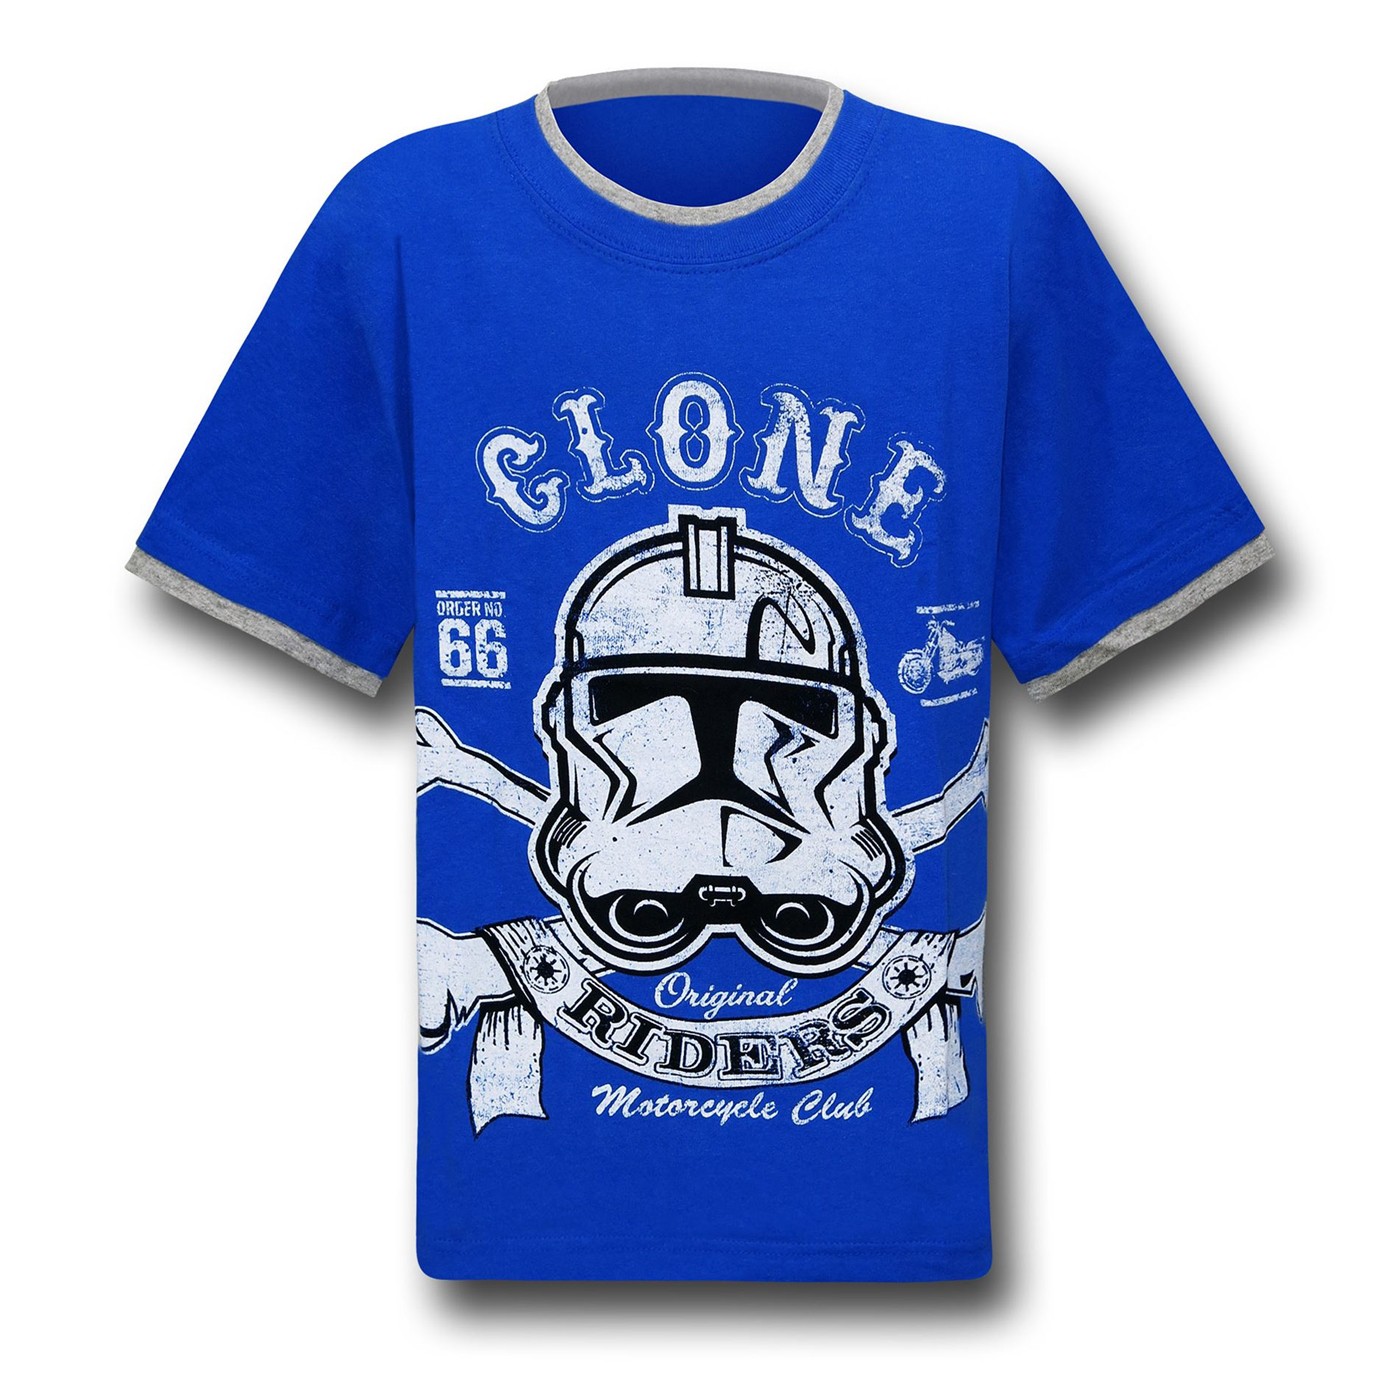 Star Wars Clone Riders Blue Kids Double T-Shirt